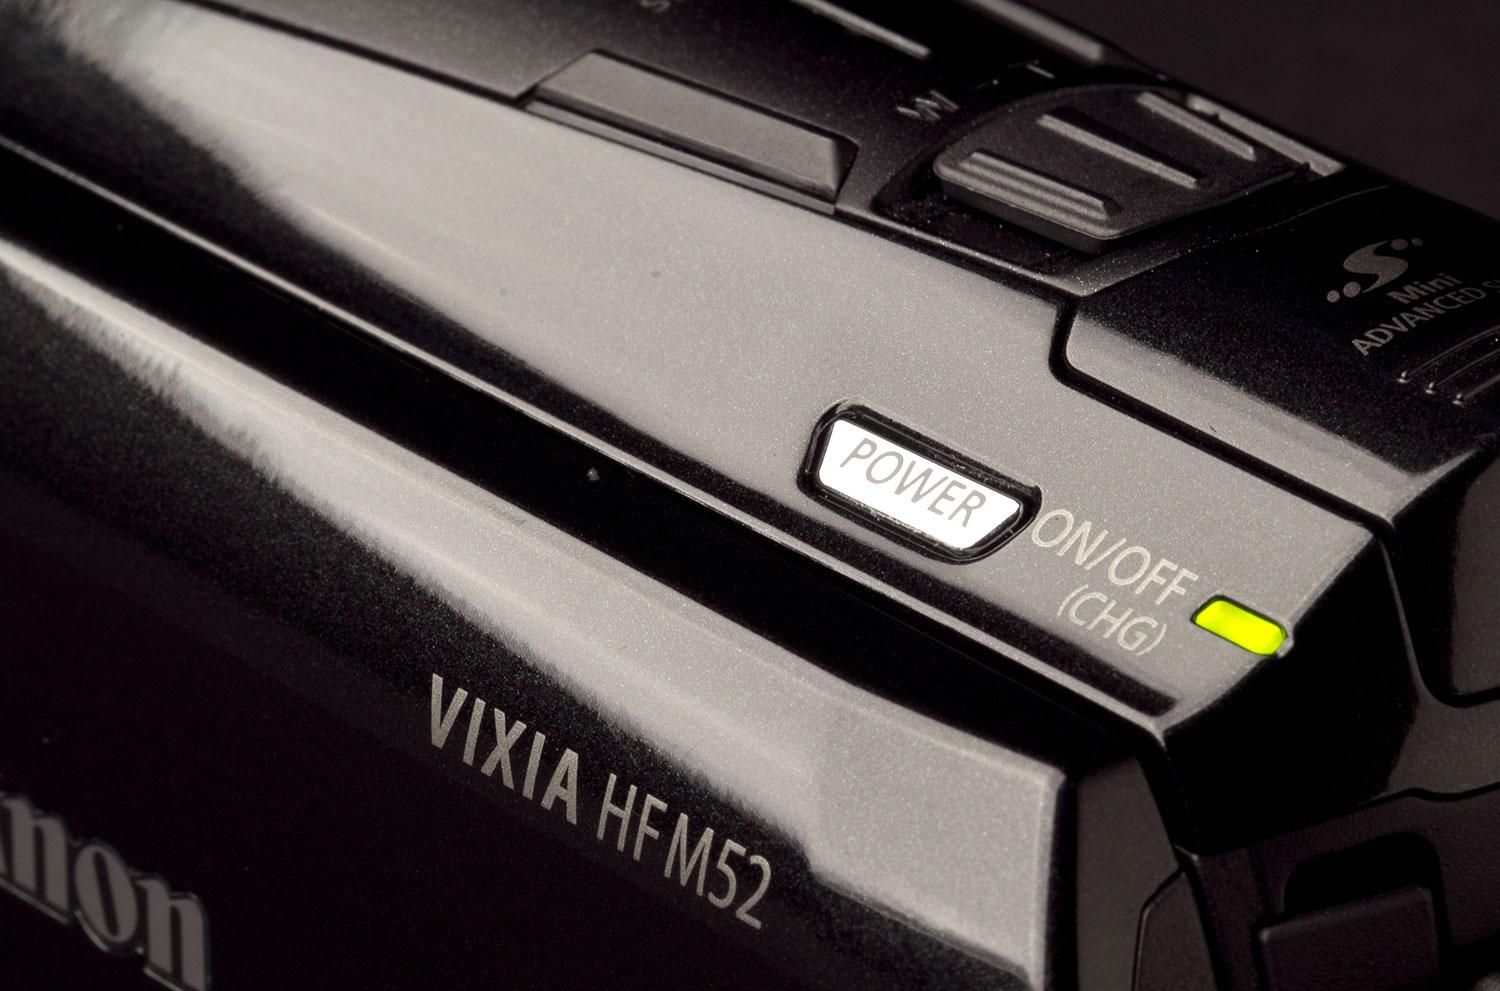 Canon VIXIA HF M52 Review | Digital Trends